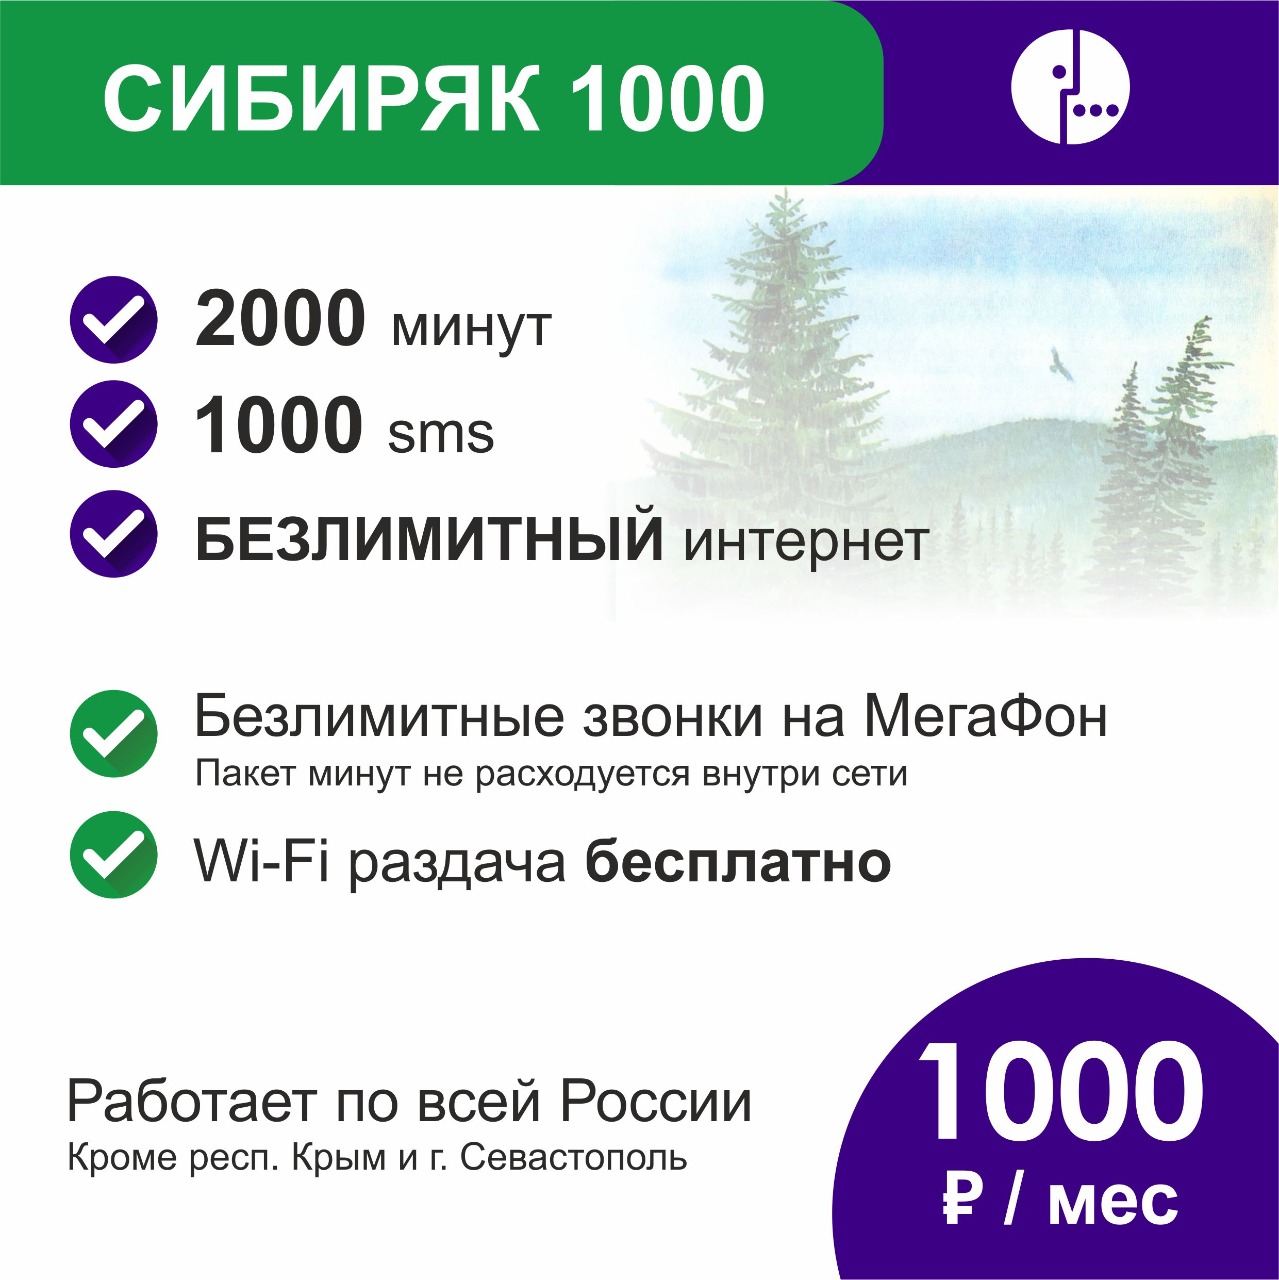 Саяногорск Инфо - whatsapp-image-2020-08-21-at-114742-1.jpeg, Скачано: 465